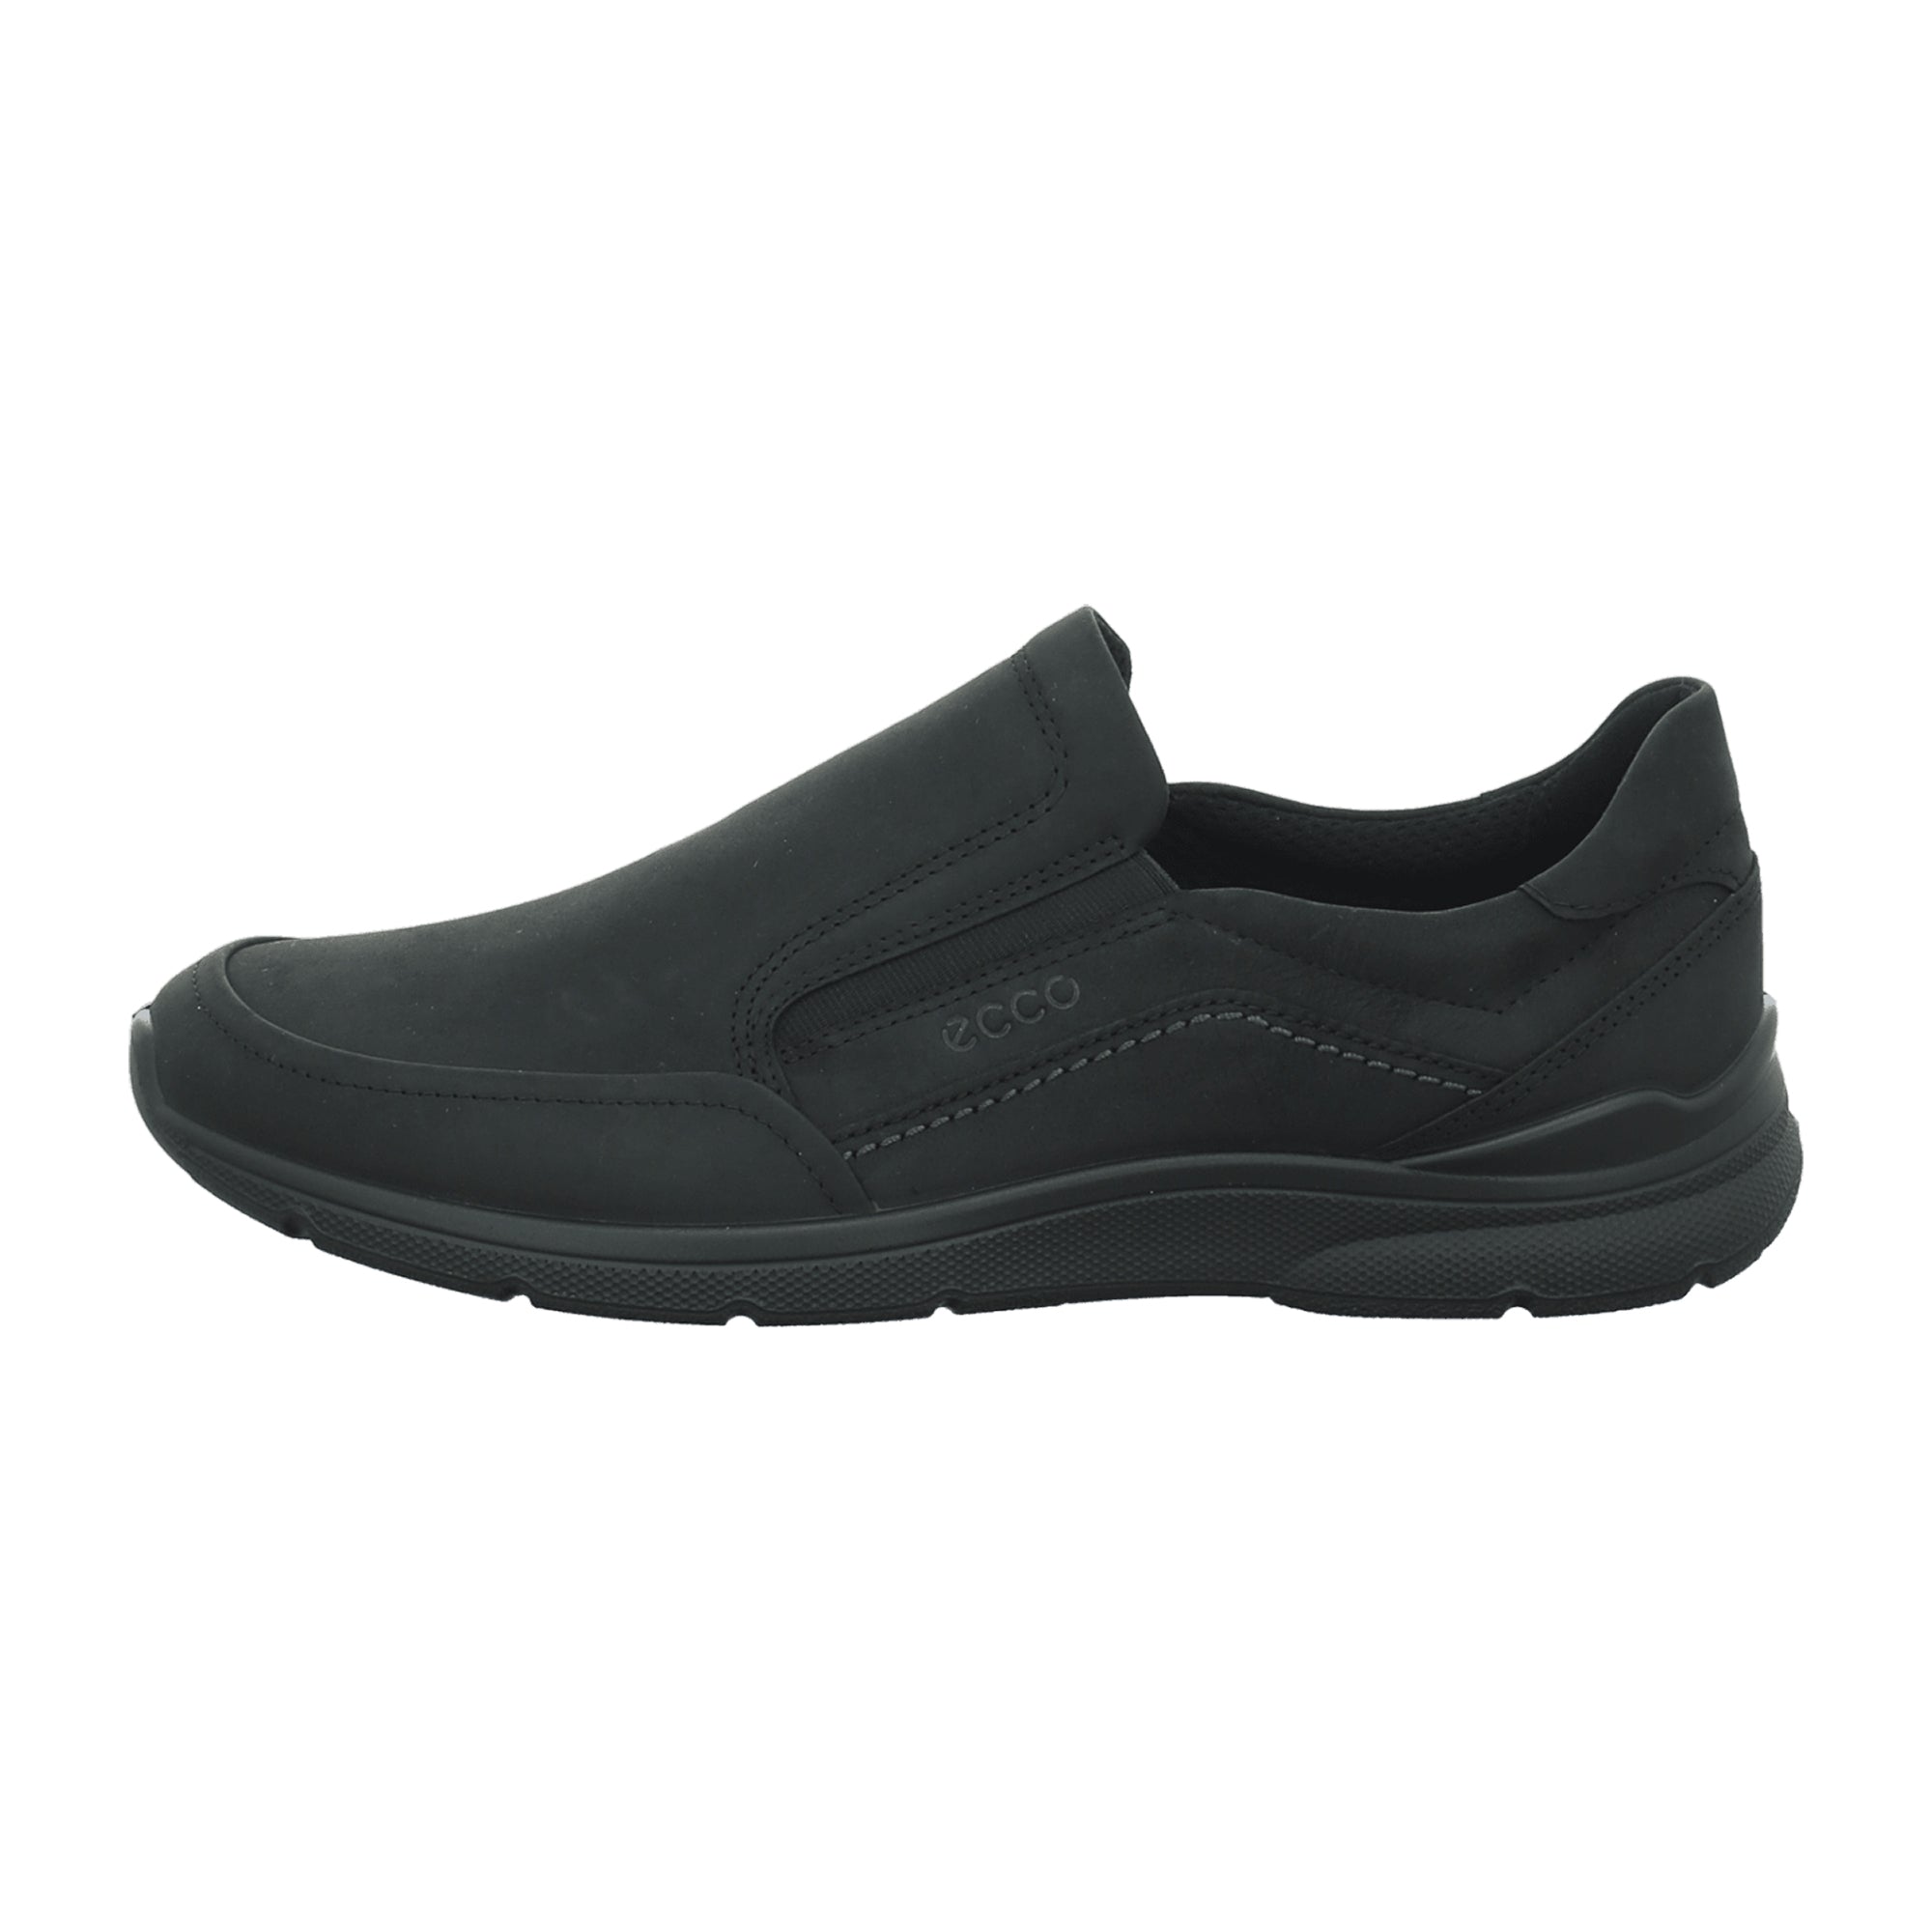 Ecco Irving Men's Black Casual Shoes - Comfortable & Durable